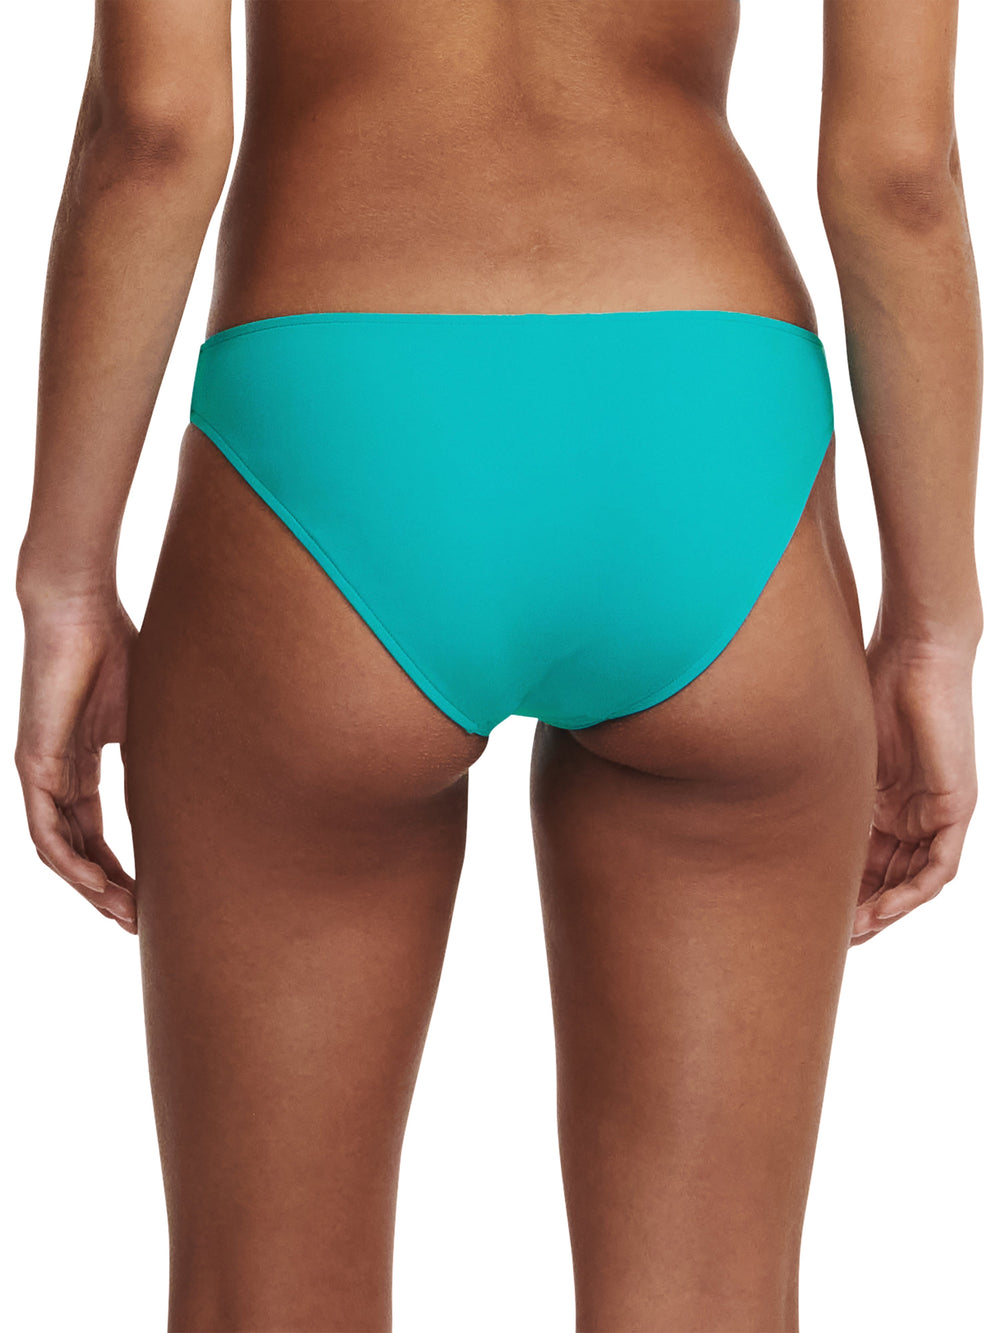 Chantelle Swimwear Emblem Bikini Brief - Lake Blue Bikini Brief Chantelle 